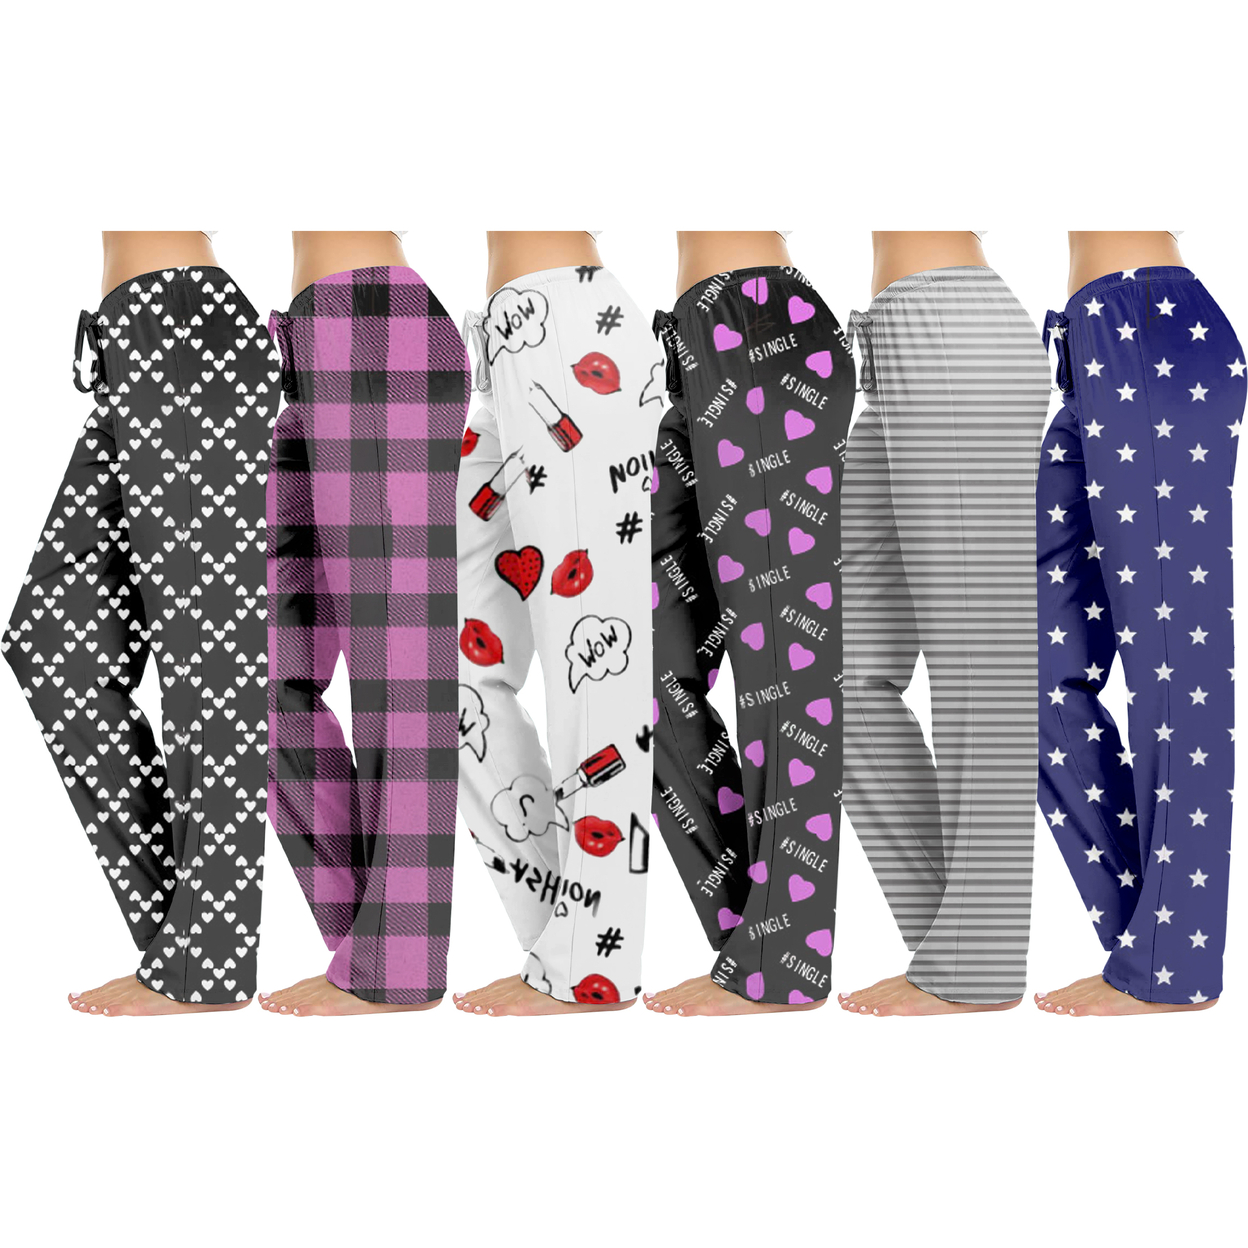 2-Pack: Women's Casual Fun Printed Lightweight Lounge Terry Knit Pajama Bottom Pants - Medium, Shapes